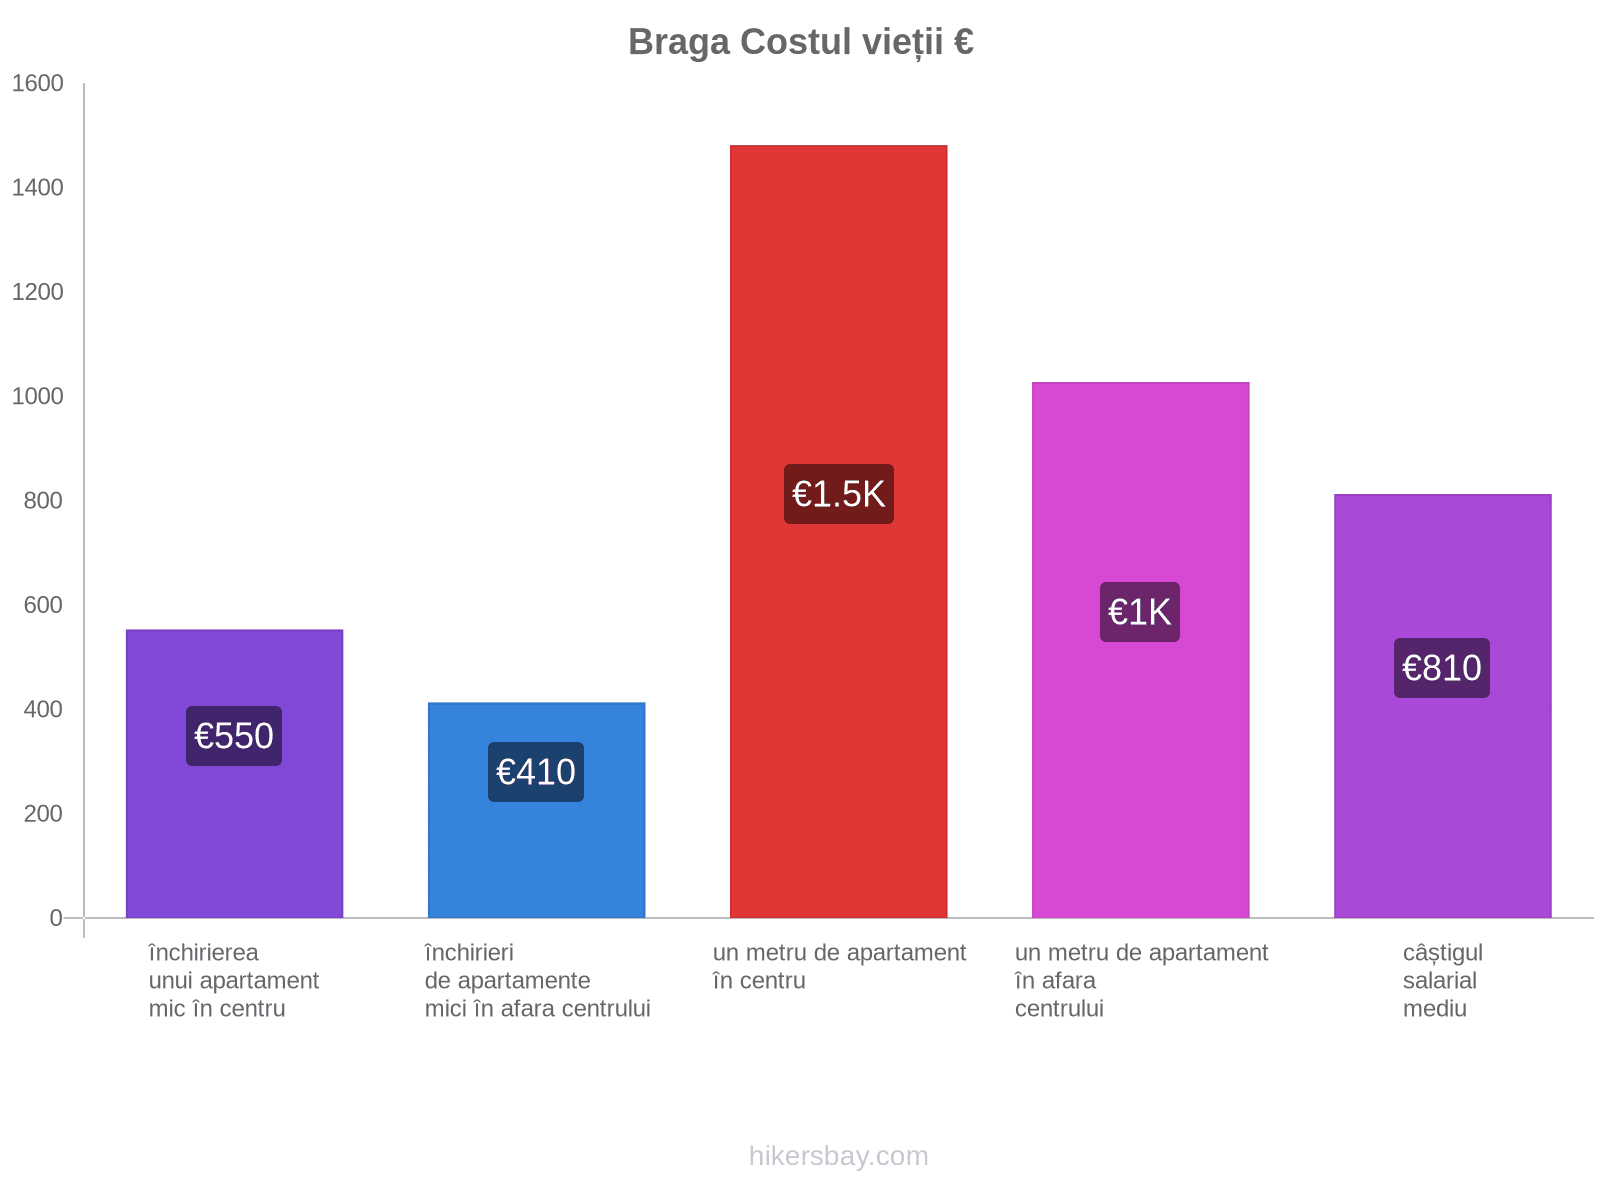 Braga costul vieții hikersbay.com